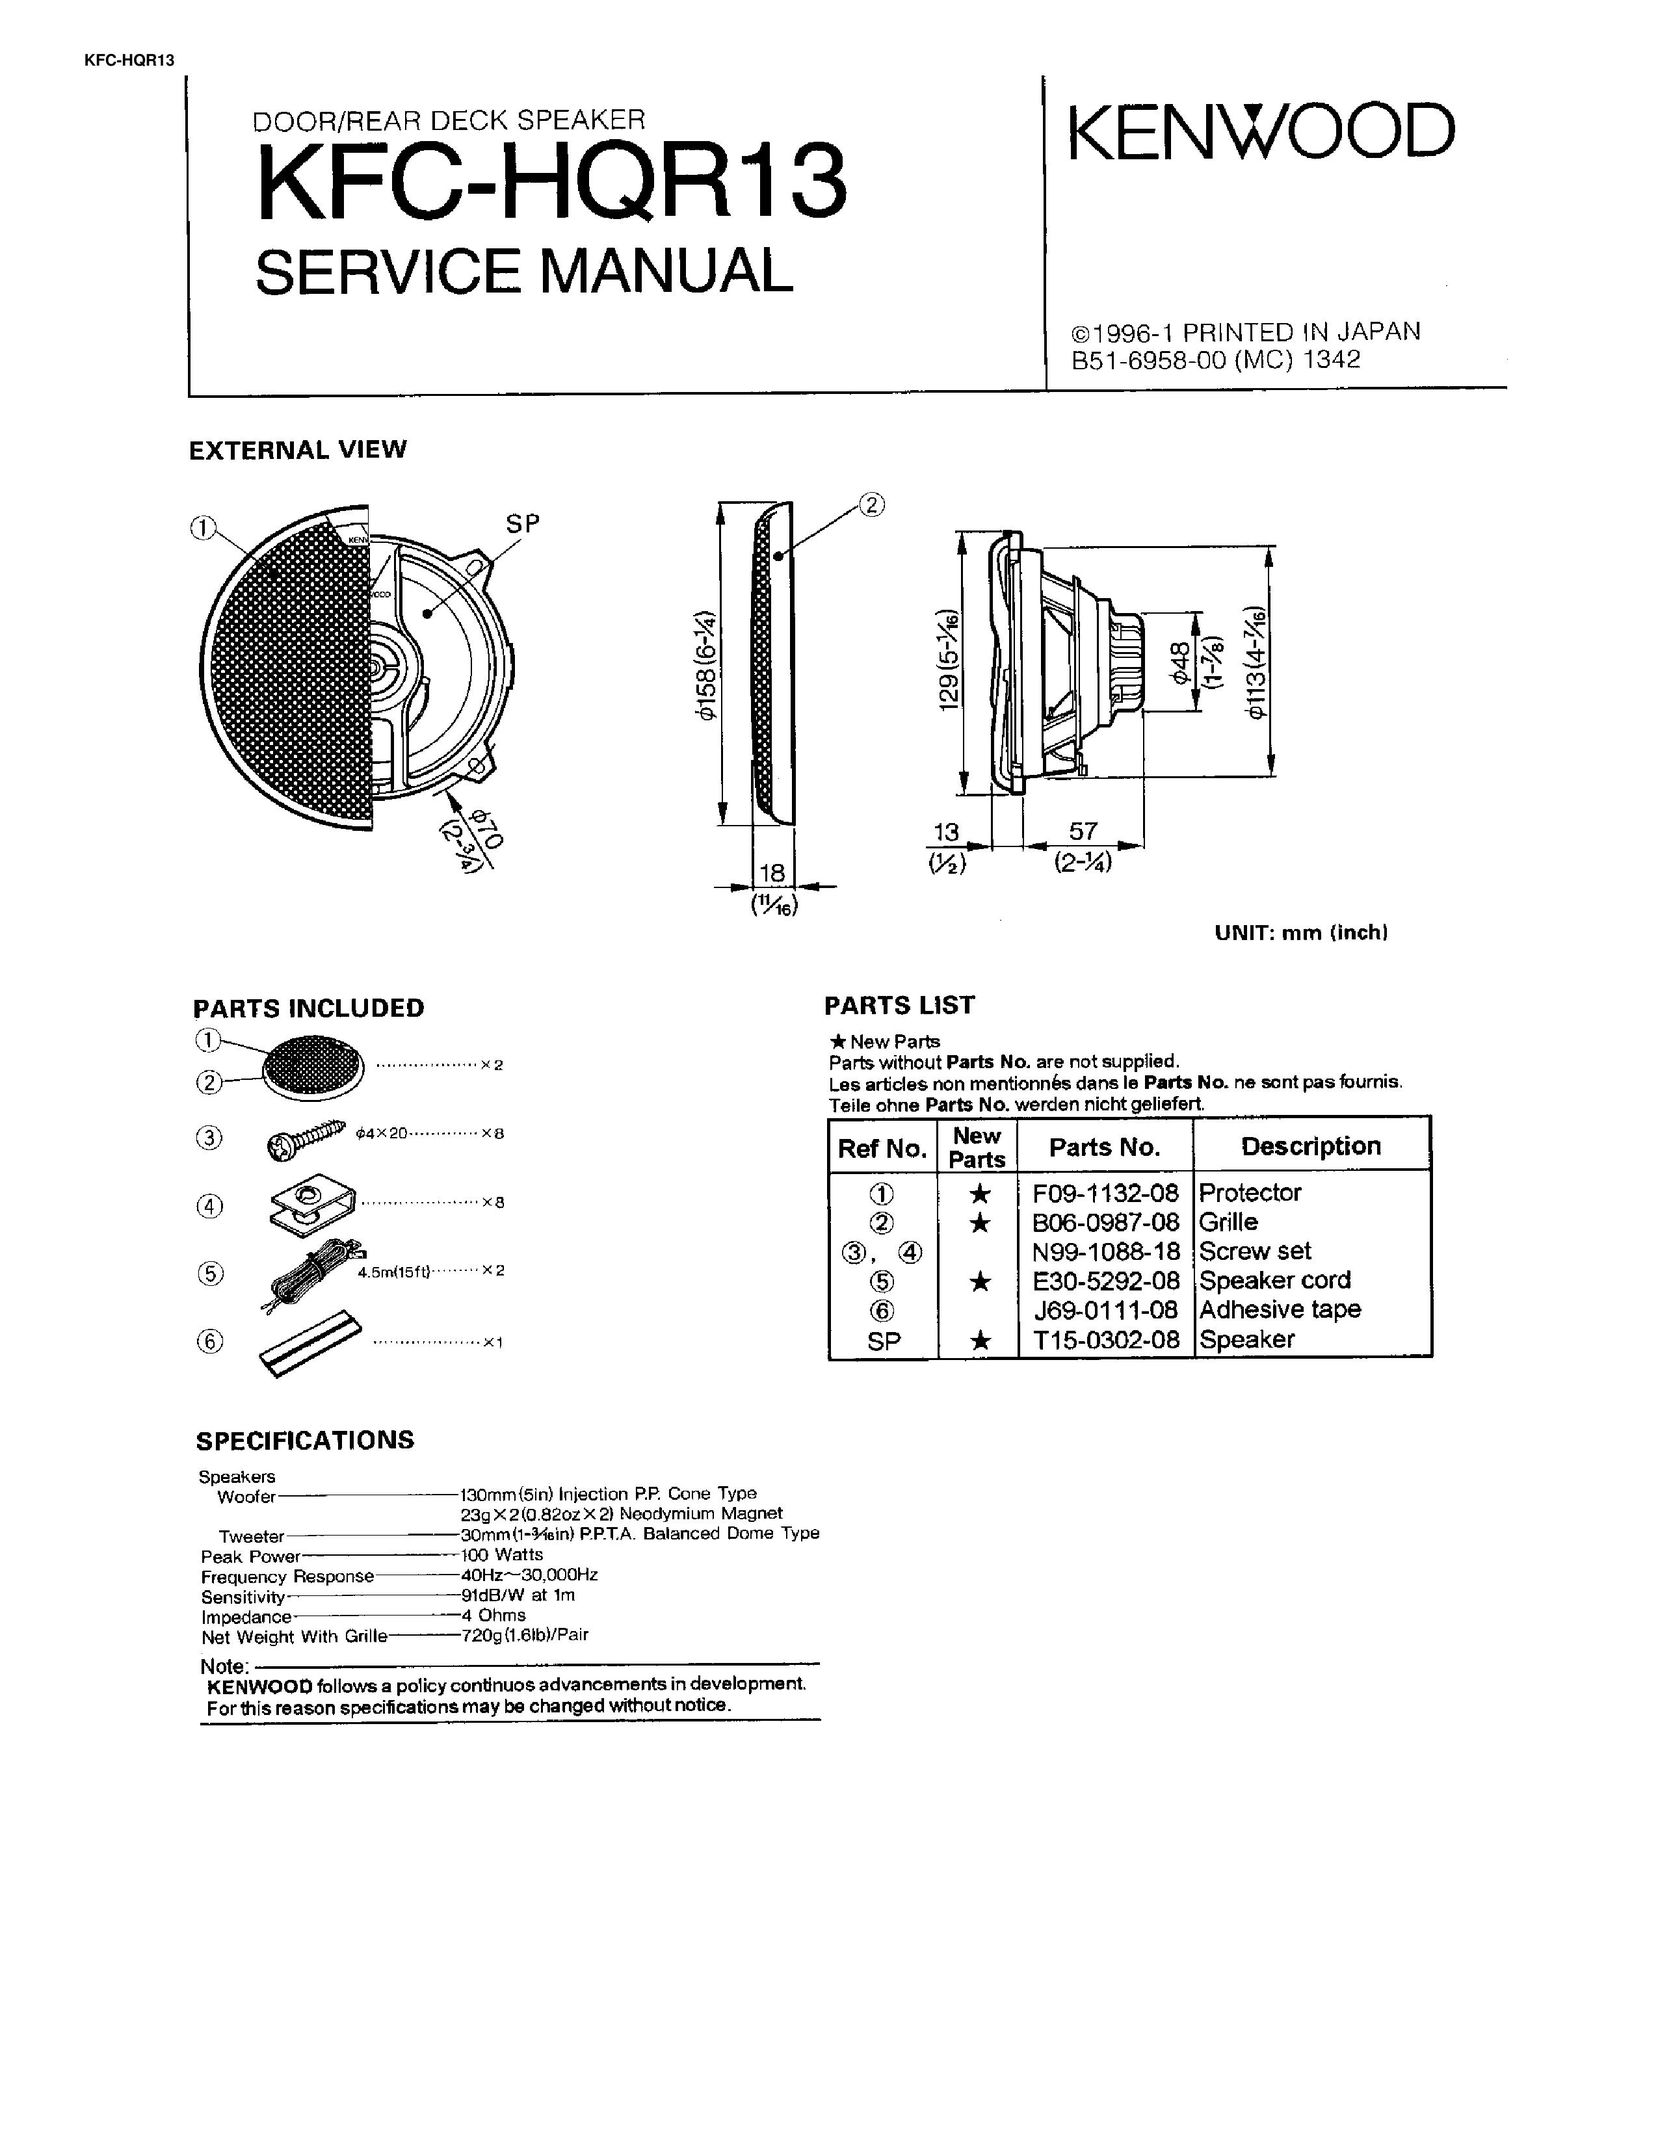 Kenwood KFC-HQR13 Car Speaker User Manual